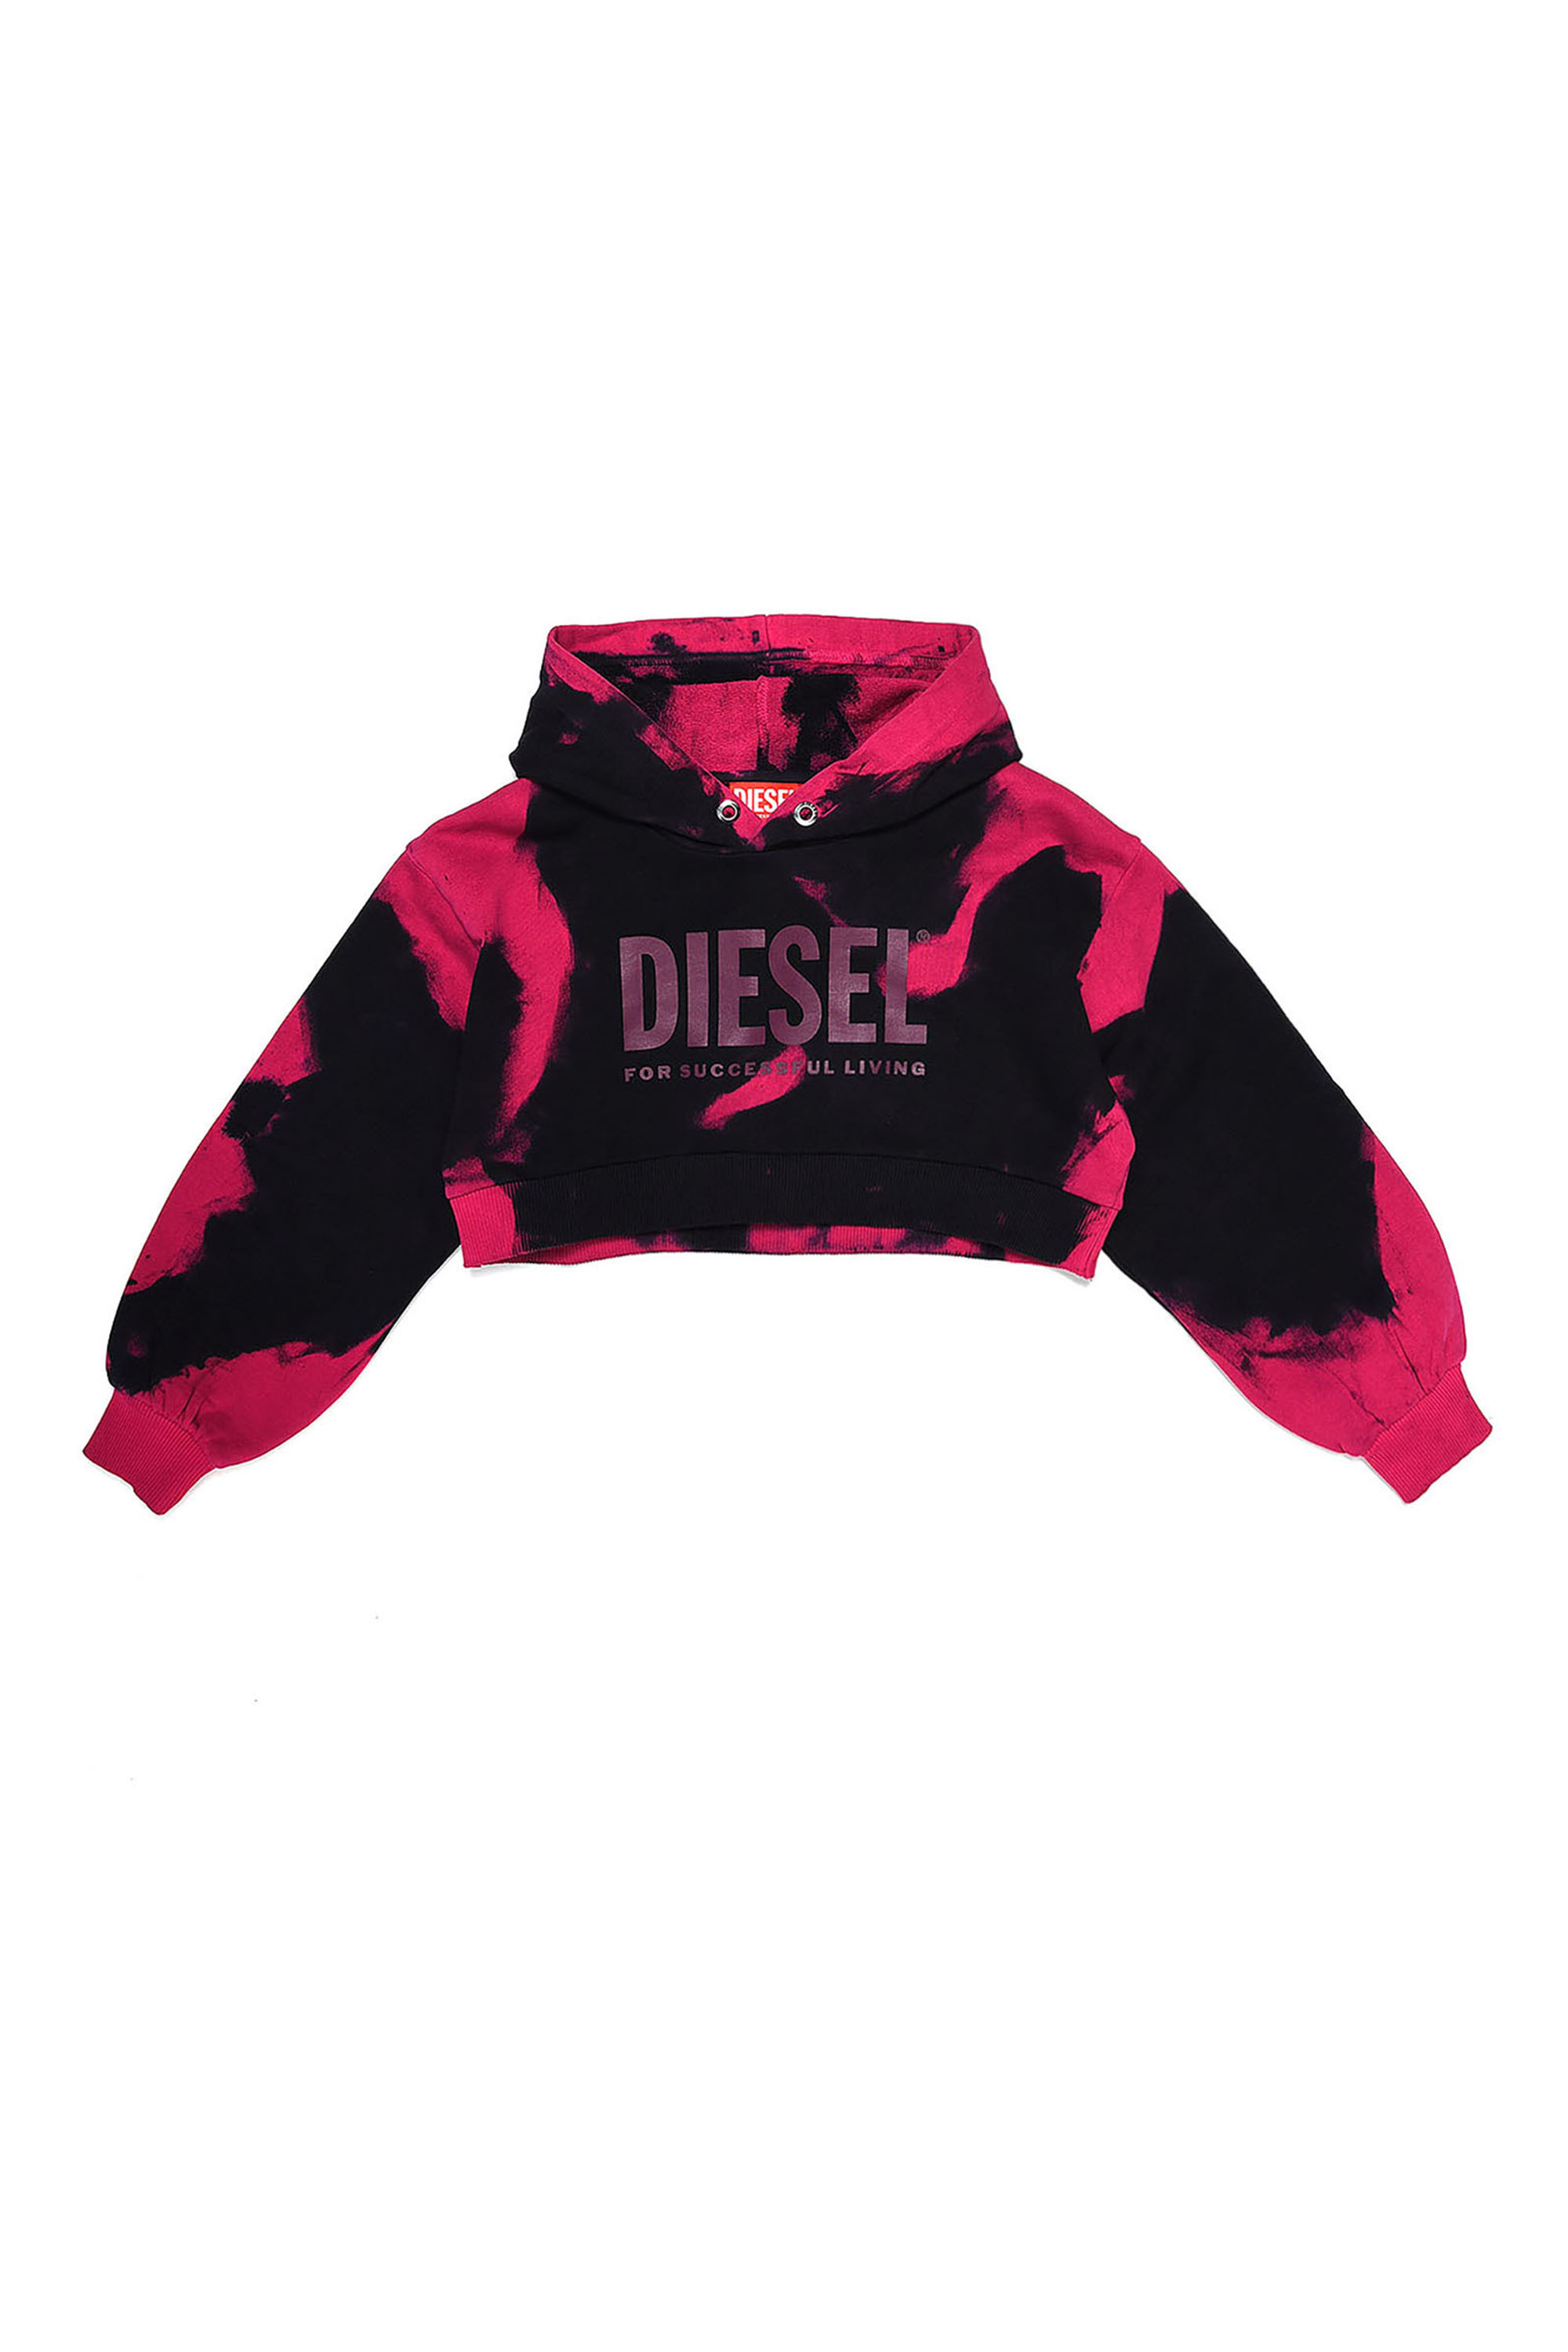 Diesel - SKRALOGOT&D, Black/Pink - Image 1